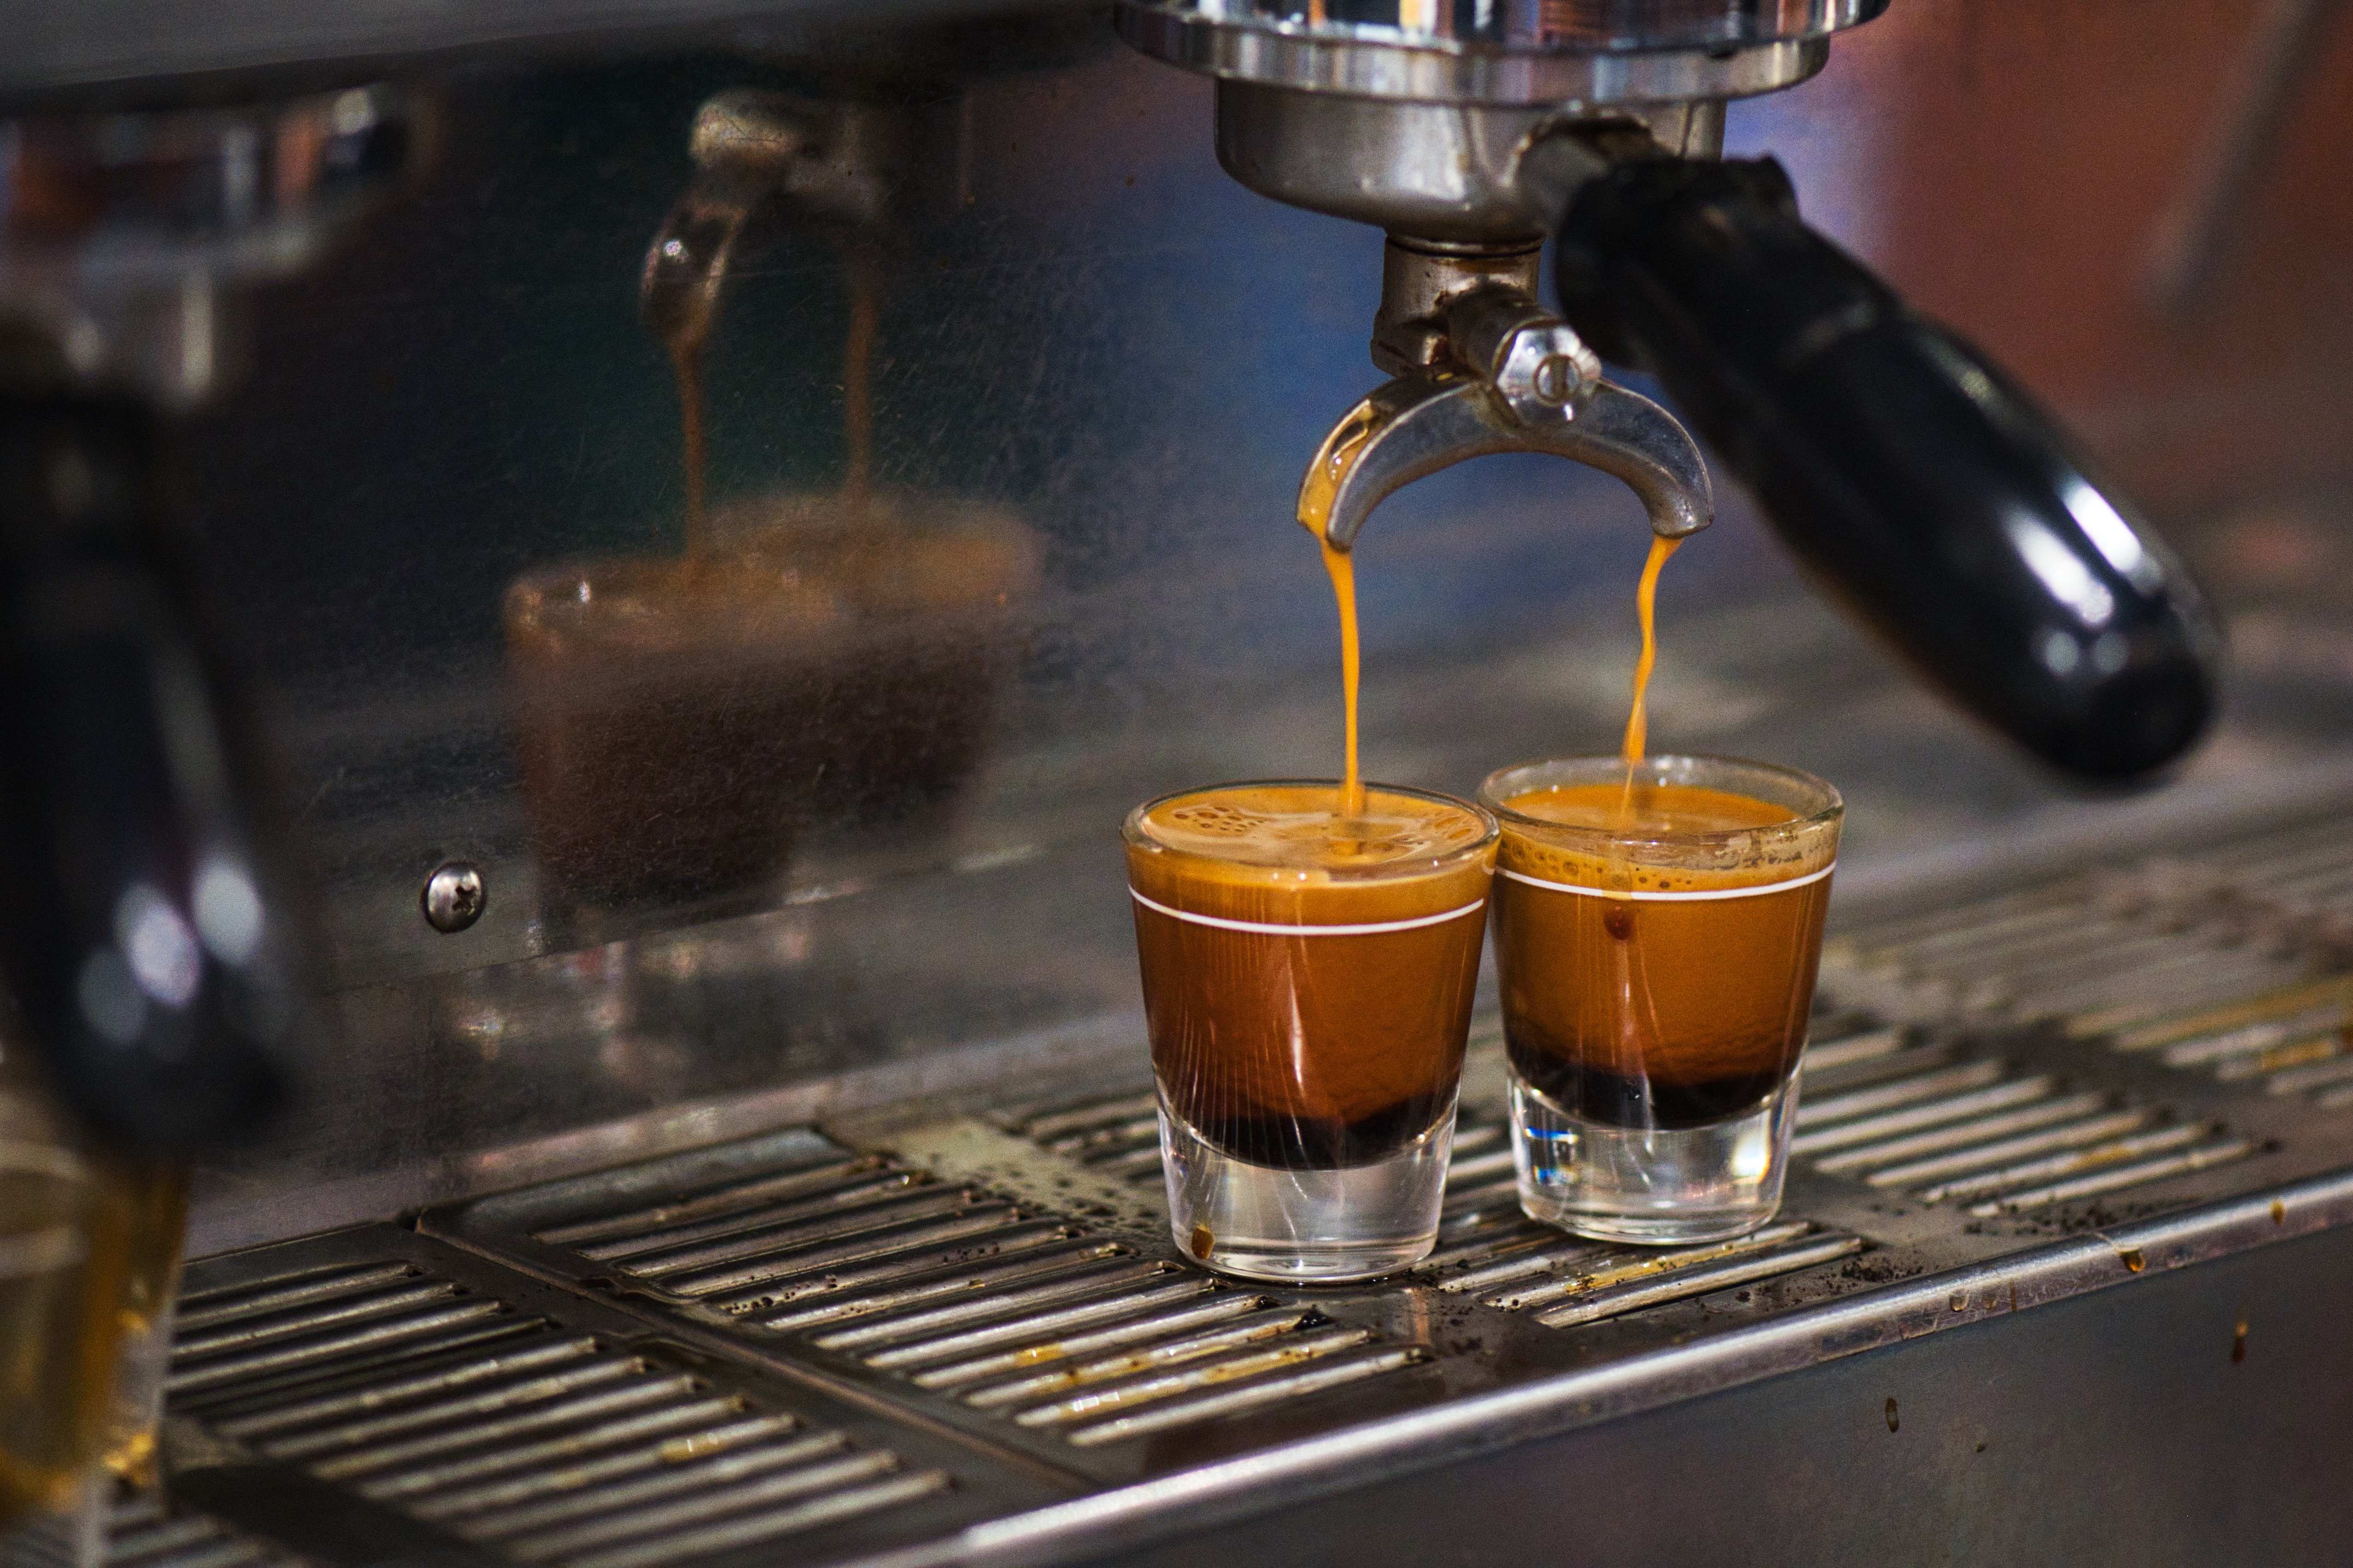 Comprehensive Beginners Guide to Espresso Coffee